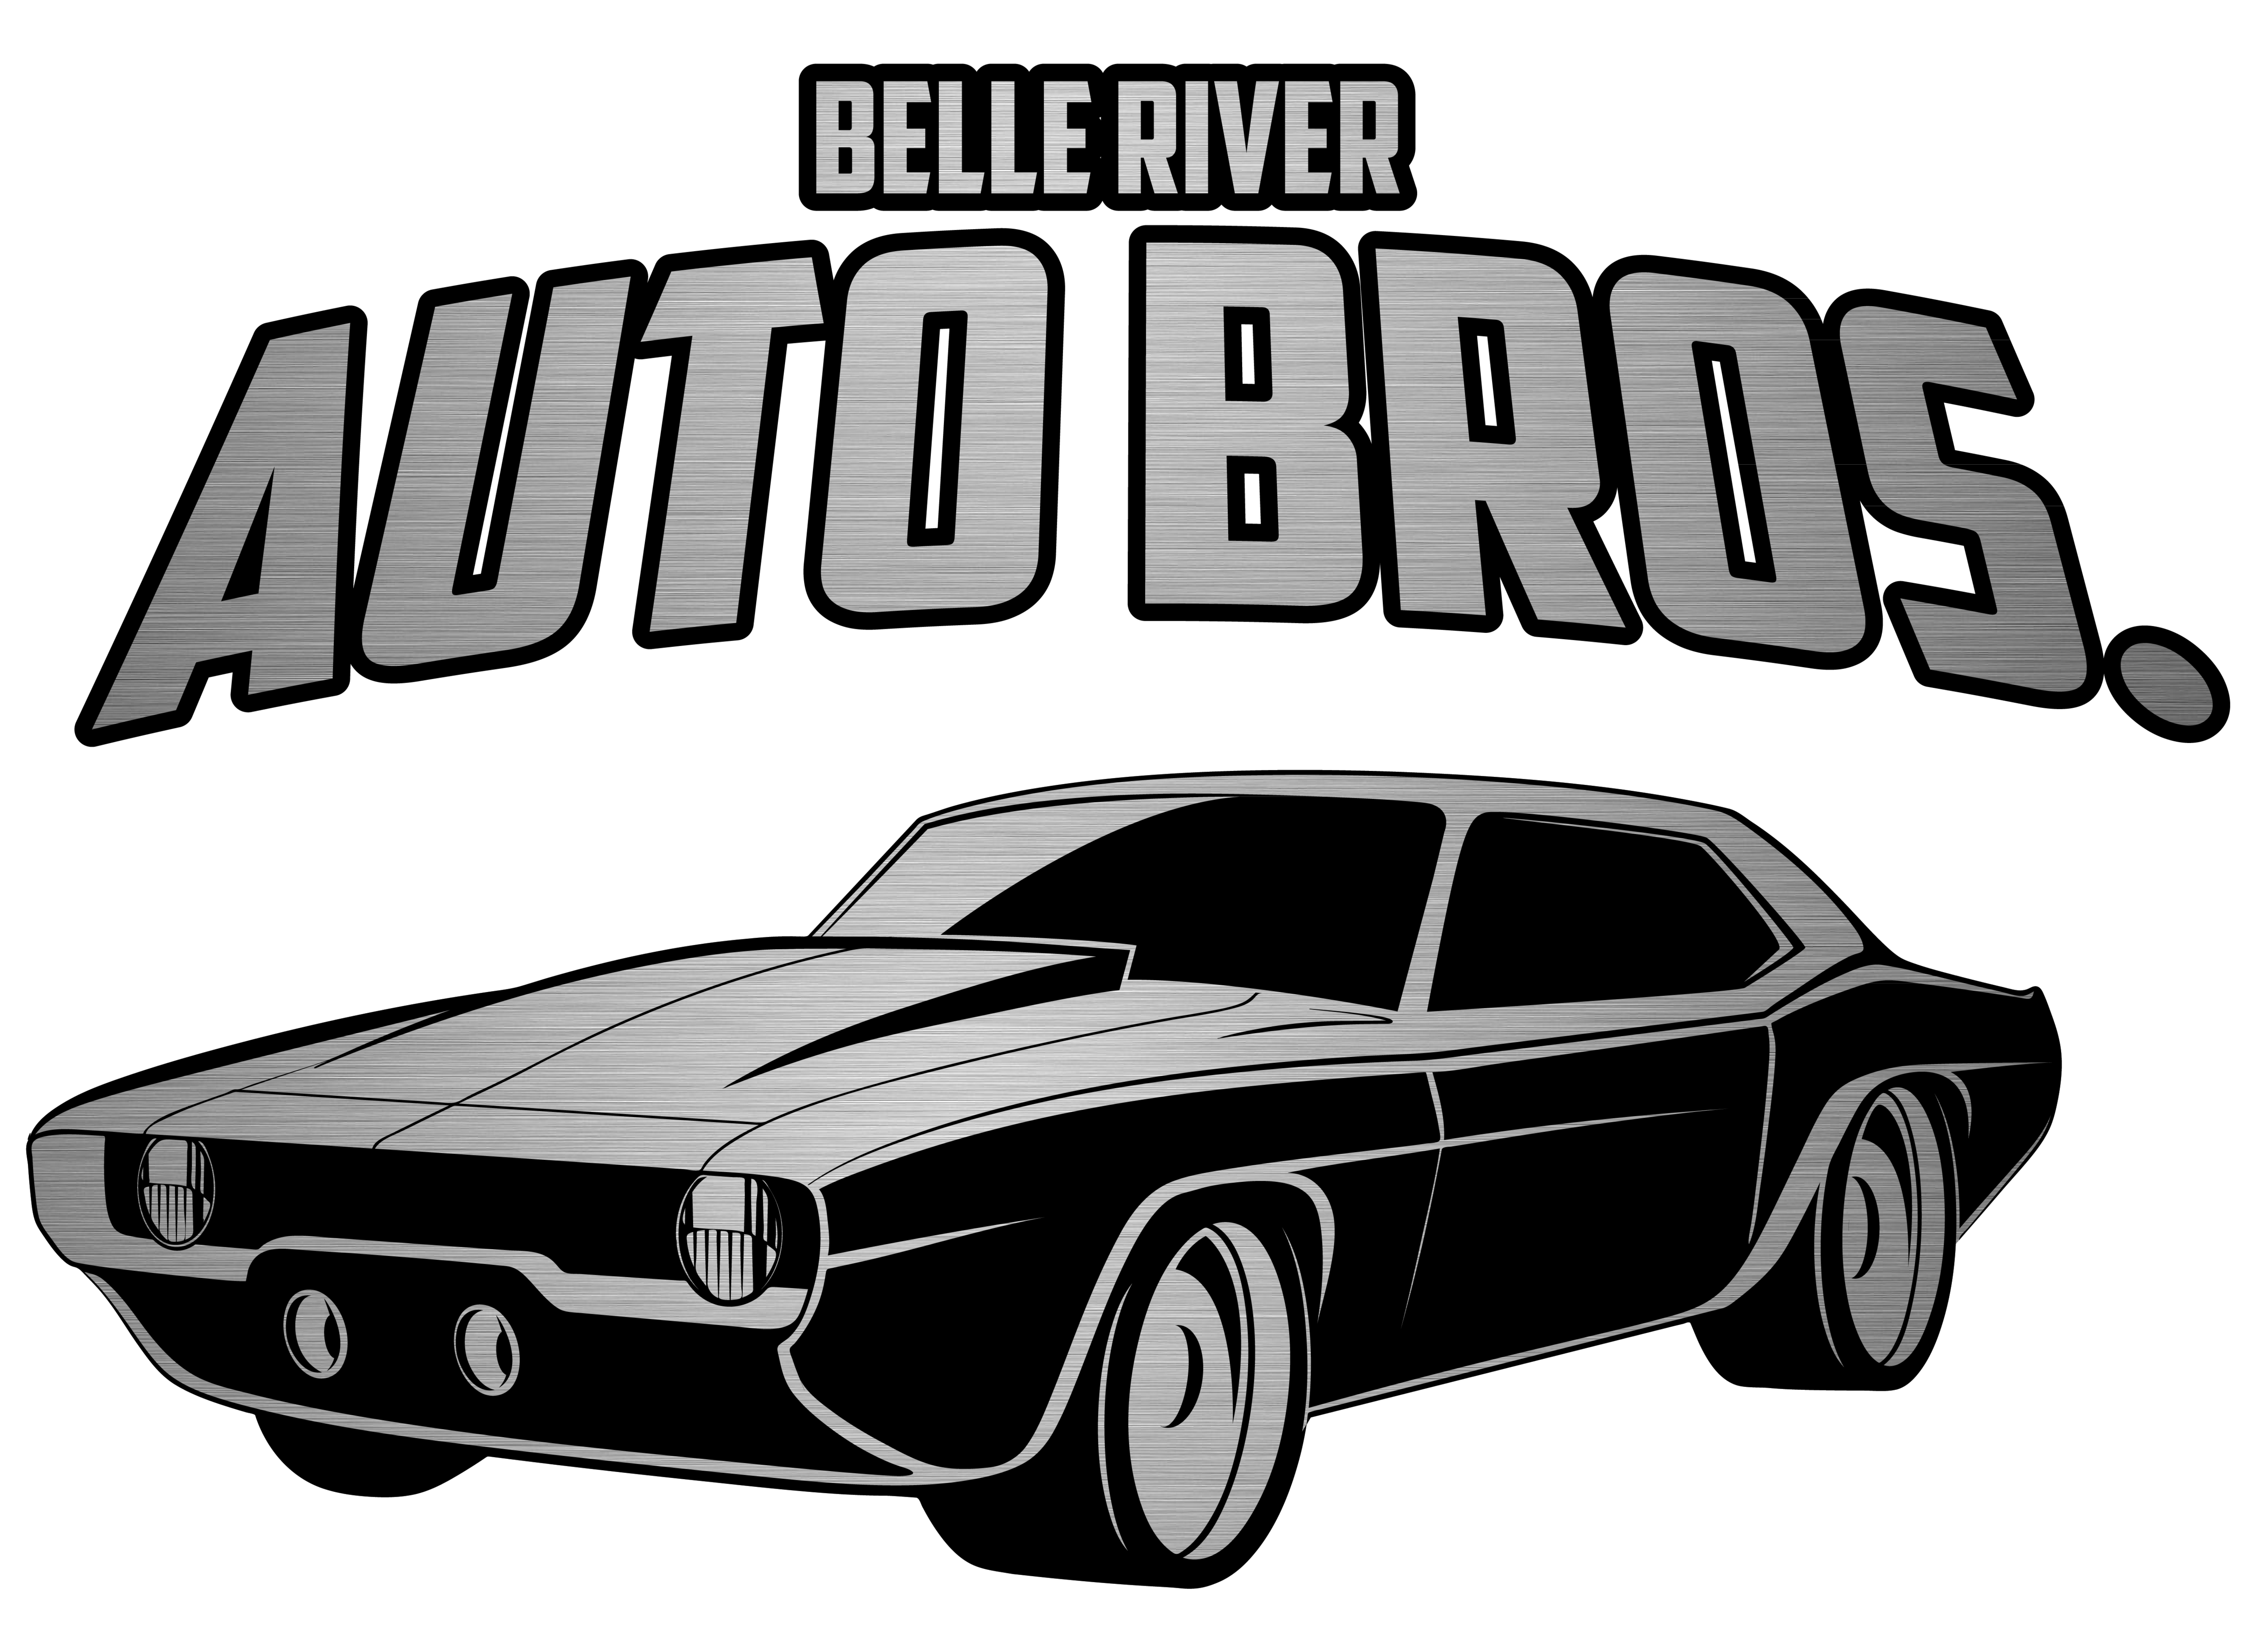 Belle River Auto Bros.